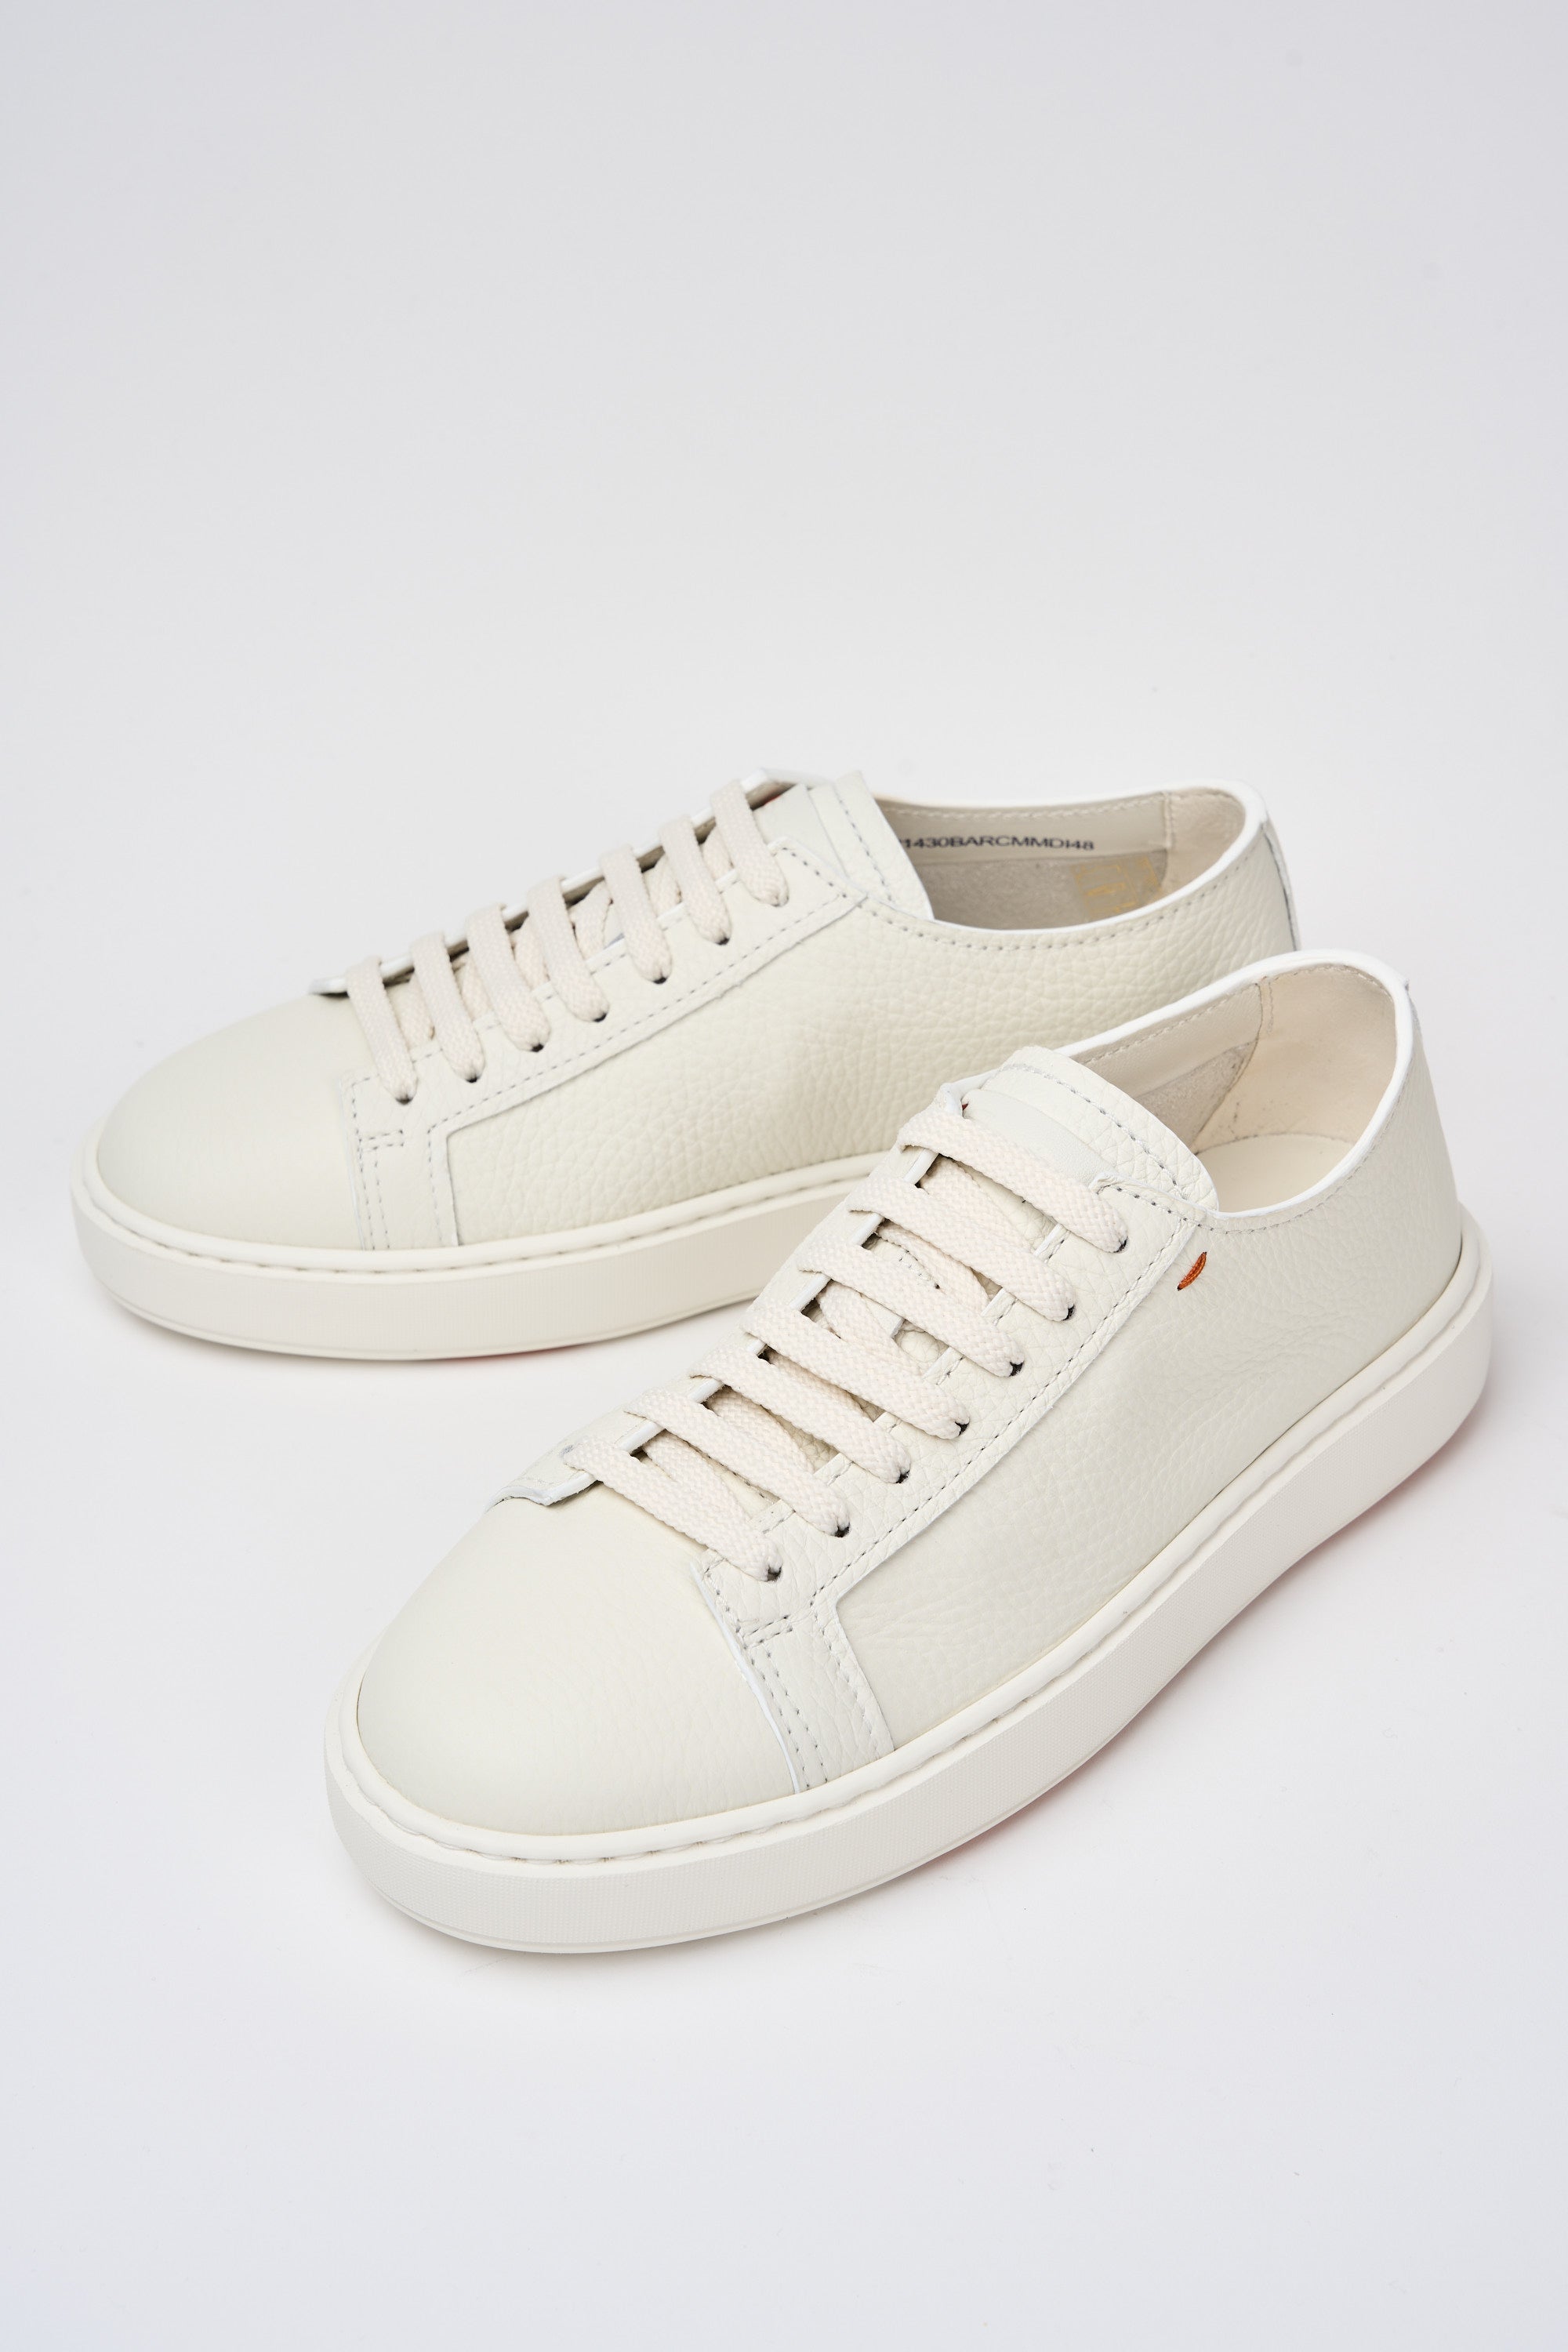 Santoni Leather Tumbled Sneakers White-7